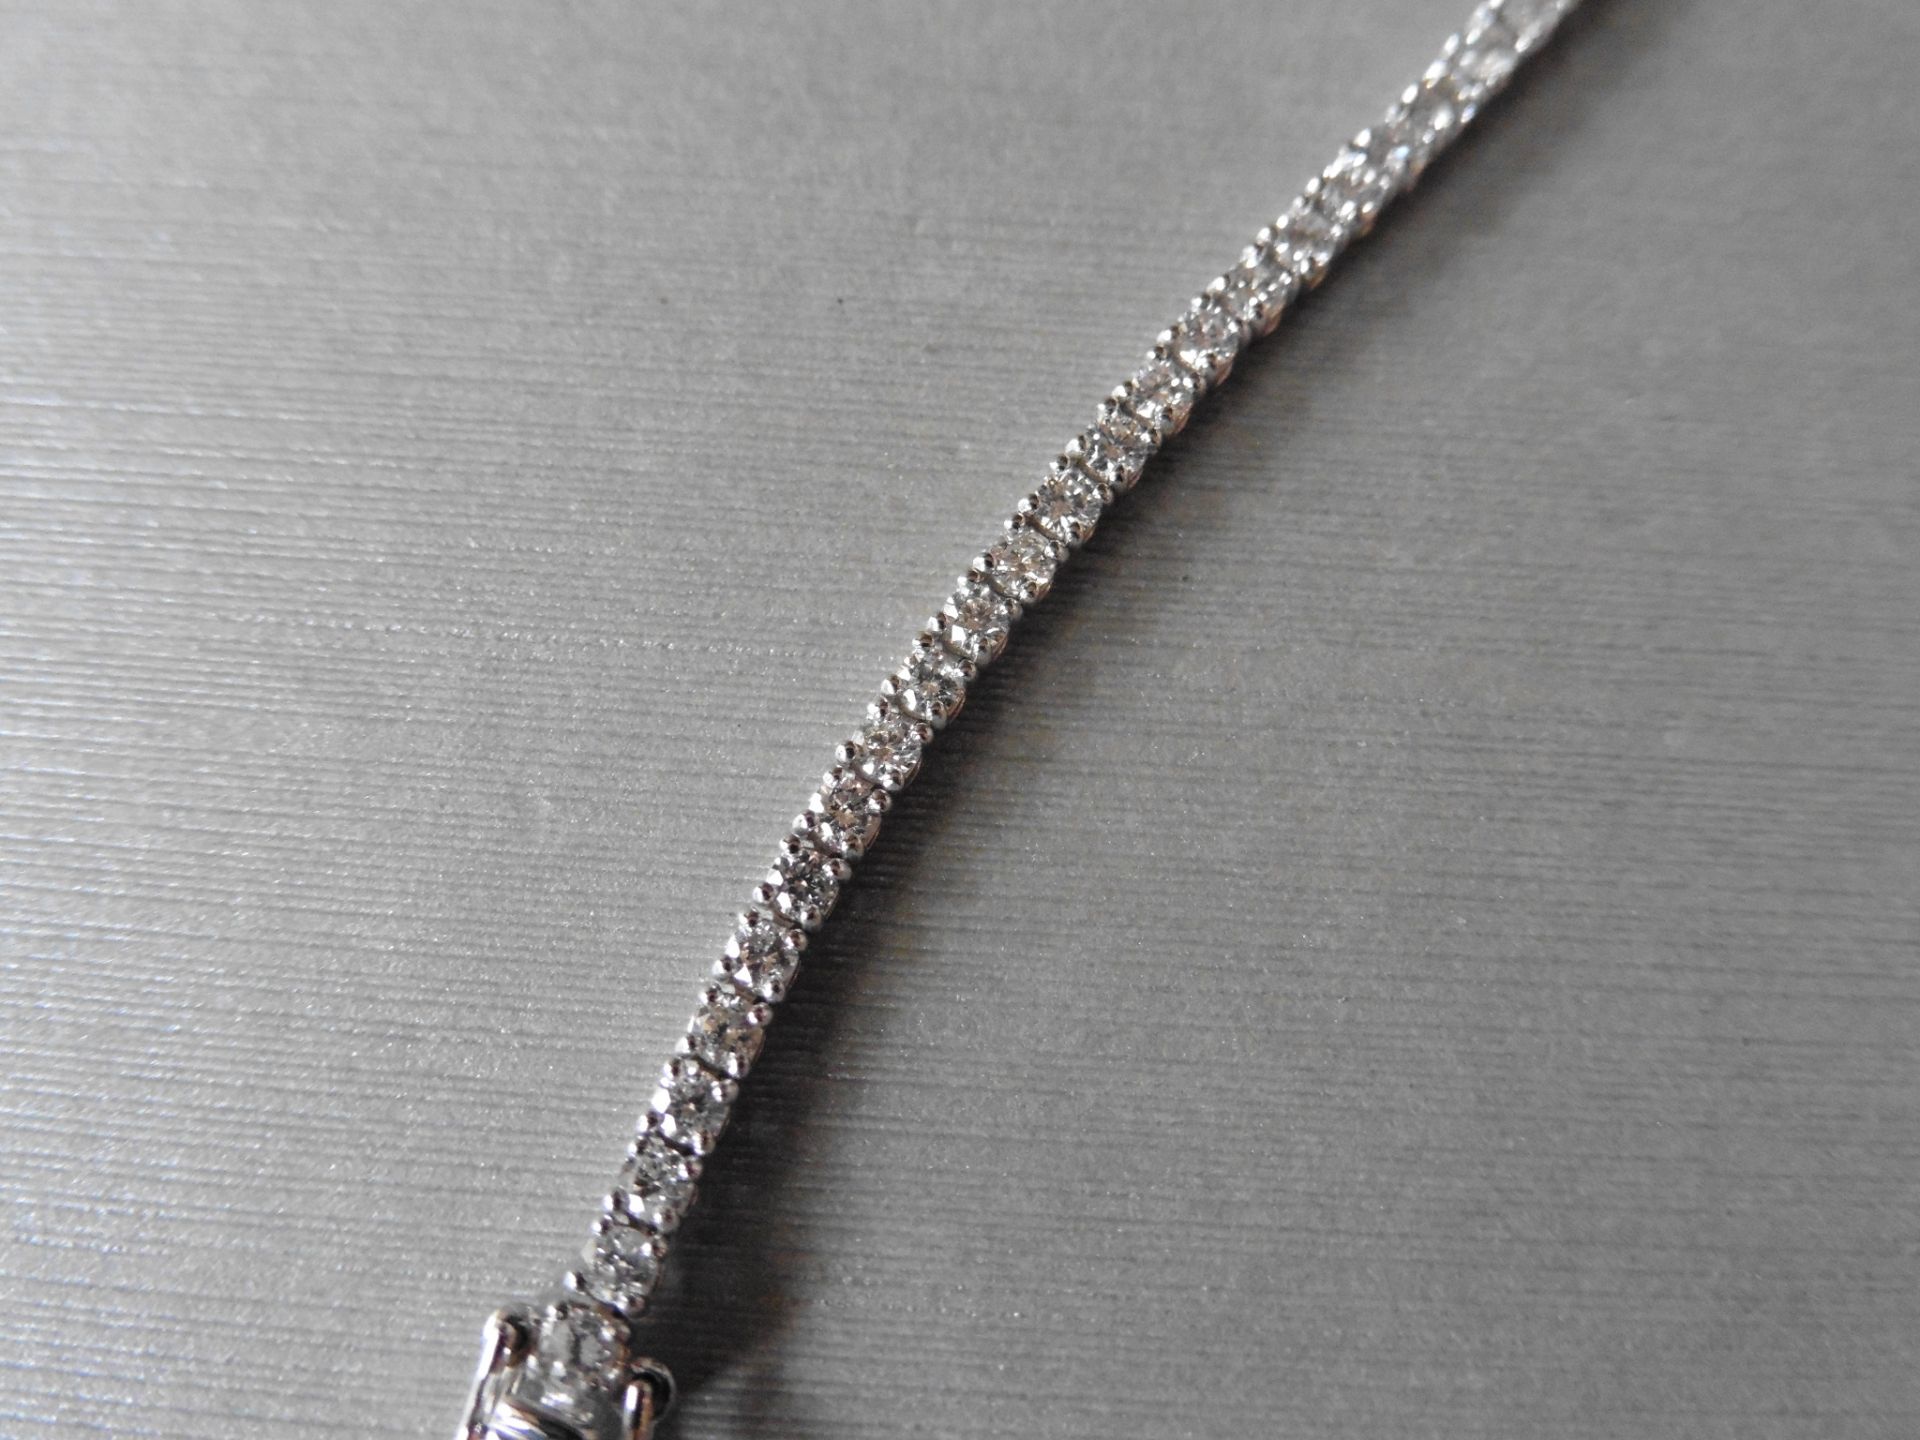 4.50ct Diamond tennis bracelet set with brilliant cut diamonds of I colour, si3 clarity. All set